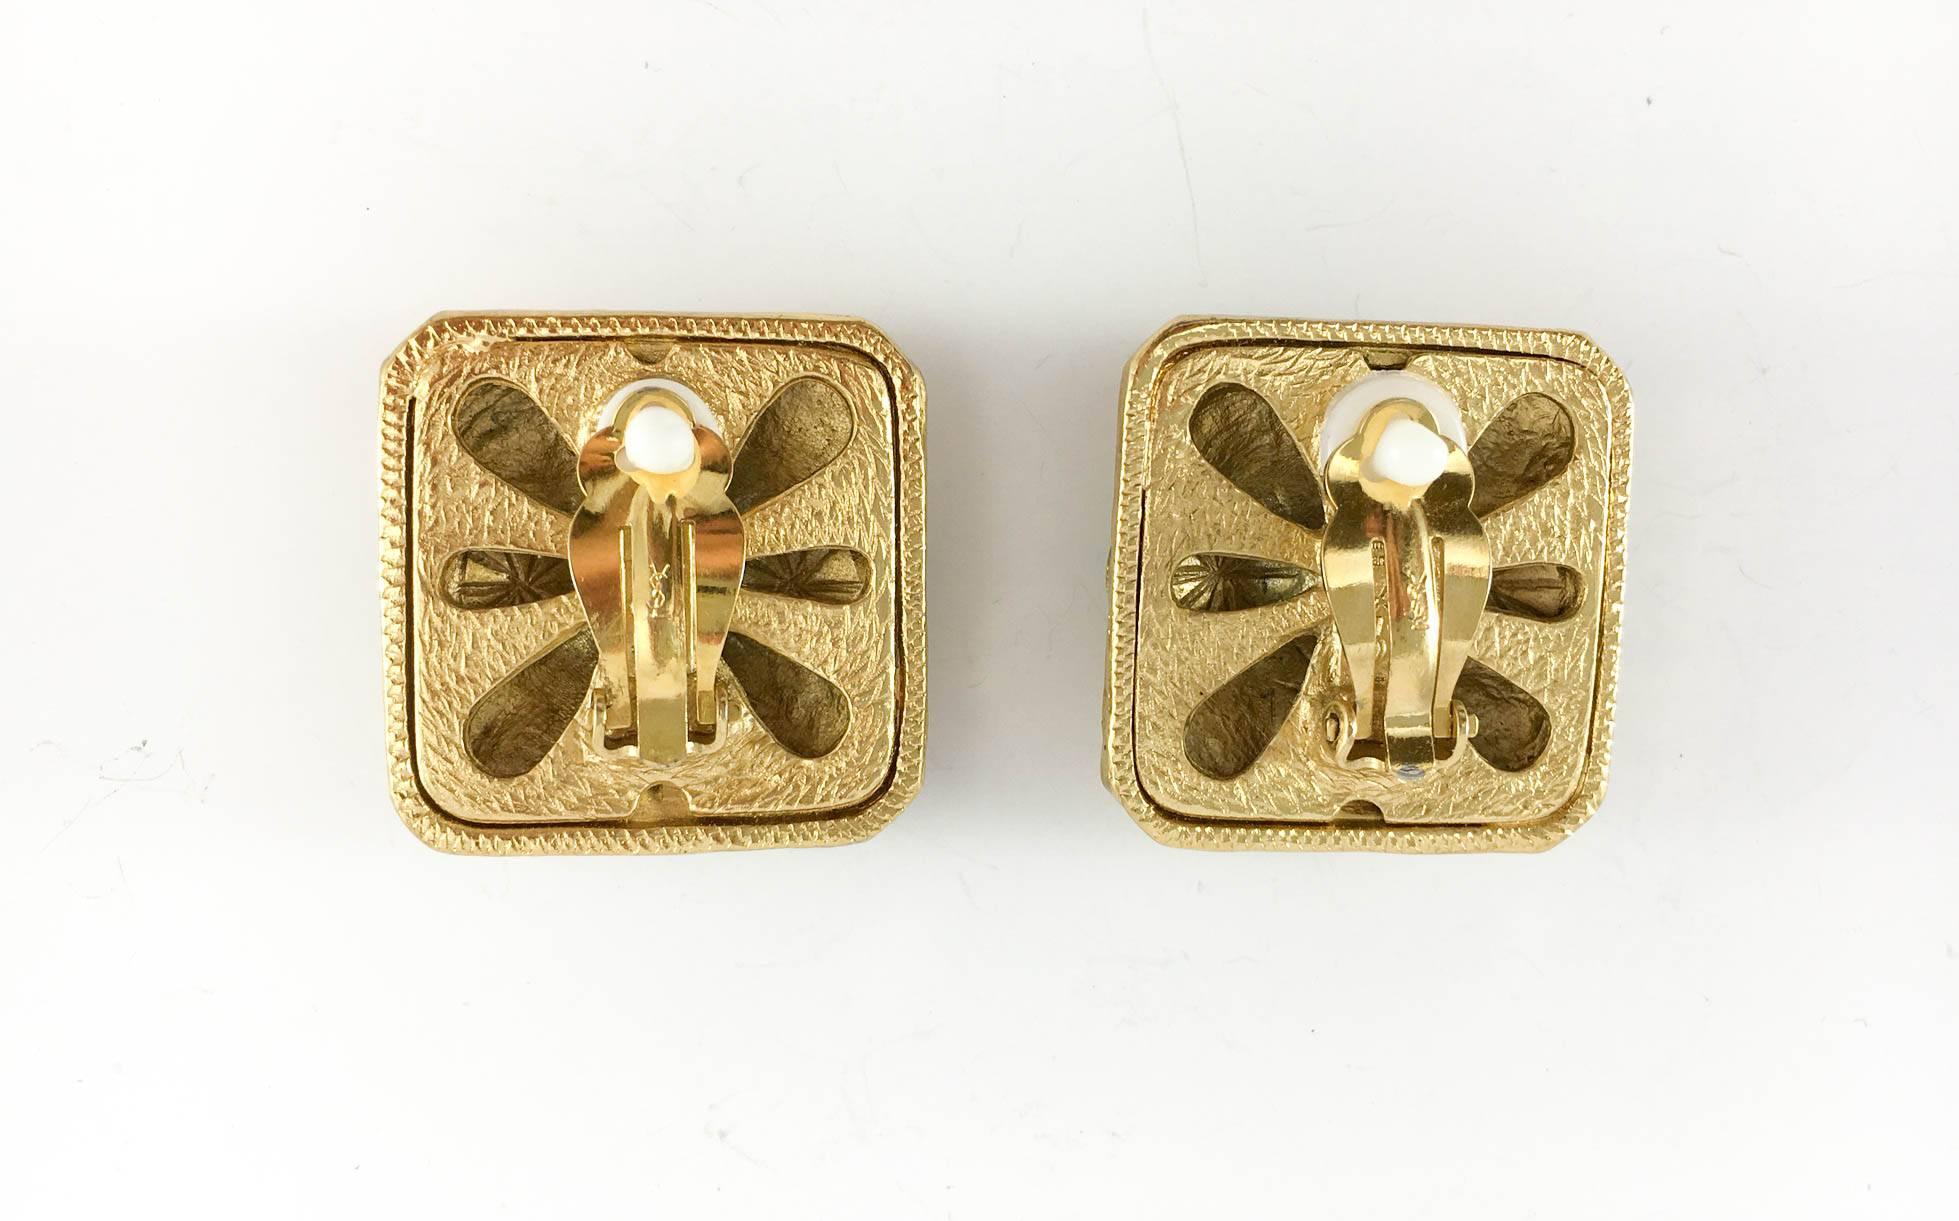 Yves Saint Laurent Gripoix Gold-Plated Earrings, by Robert Goossens - 1980s For Sale 1